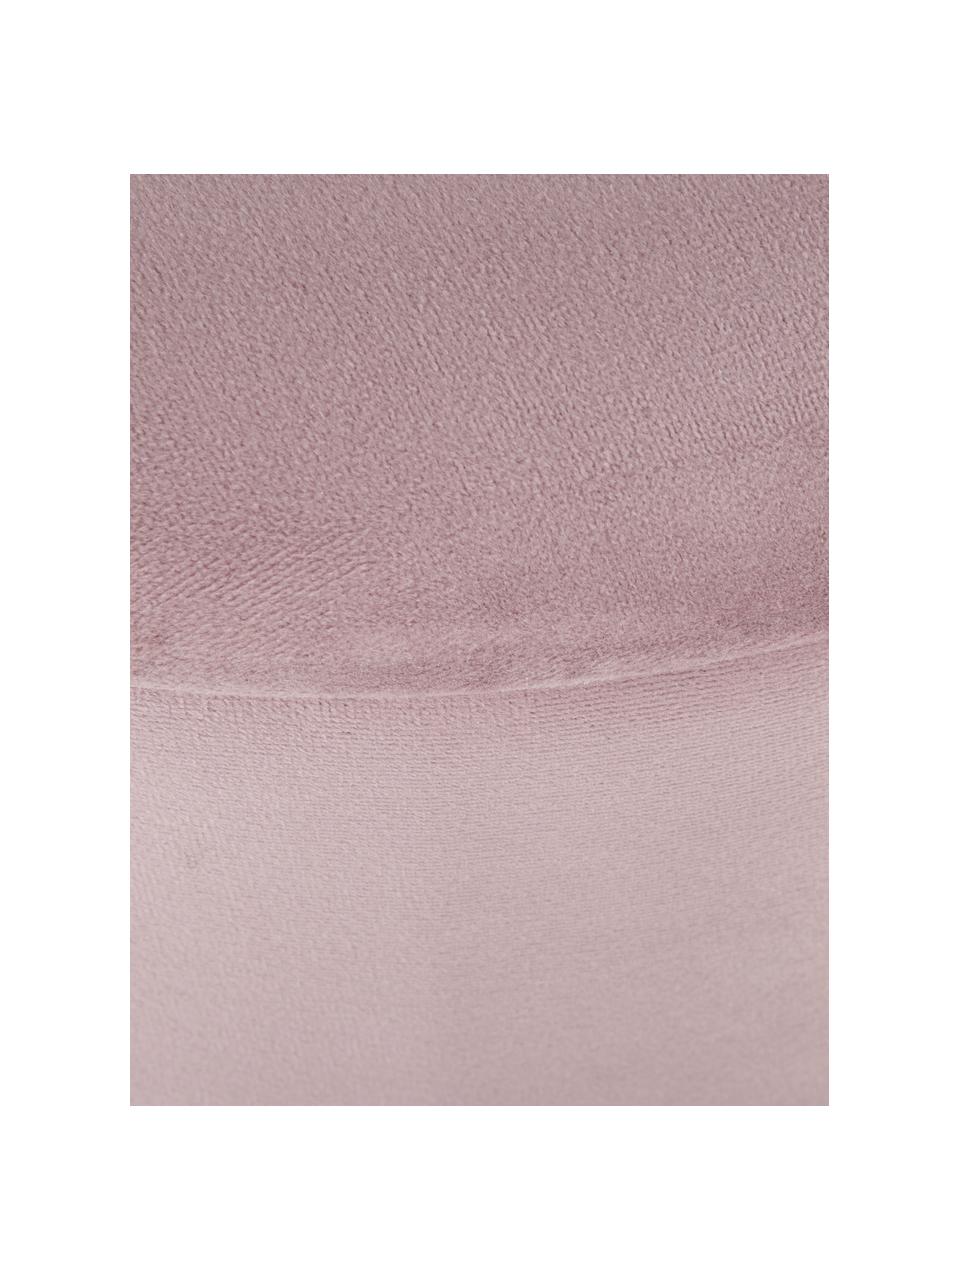 Taburete de terciopelo Polina, con espacio de almacenamiento, Tapizado: terciopelo de poliéster A, Estructura: metal, pintado, Terciopelo rosa, latón, Ø 35 x Al 45 cm